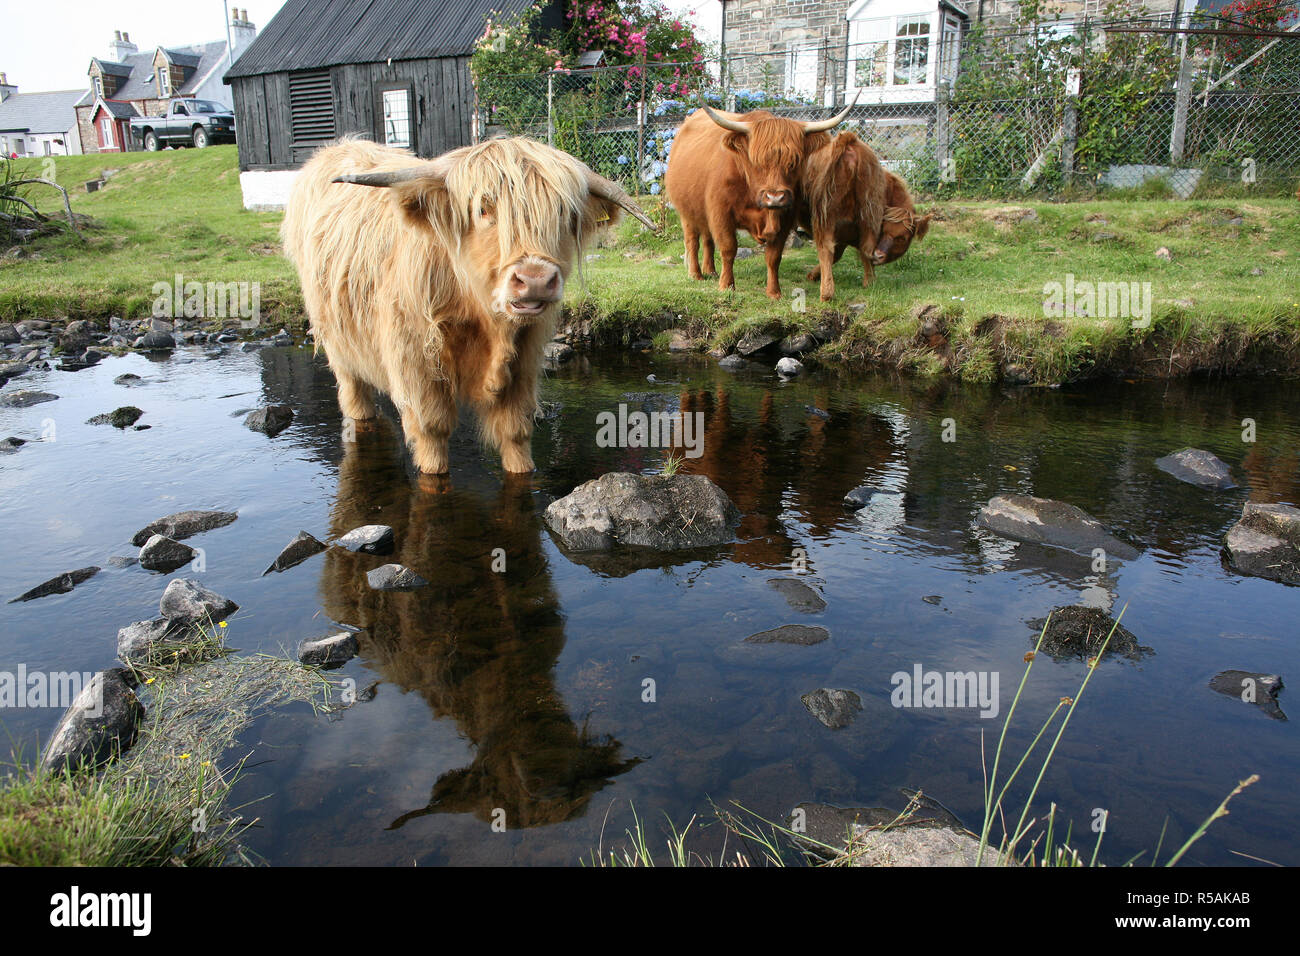 Highland Cattle, Duirinish river in the crofting township of Duirinish, near Plockton, Kyle of Lochalsh, UK, Scotland Allan Milligan / Alamy Stock Stock Photo